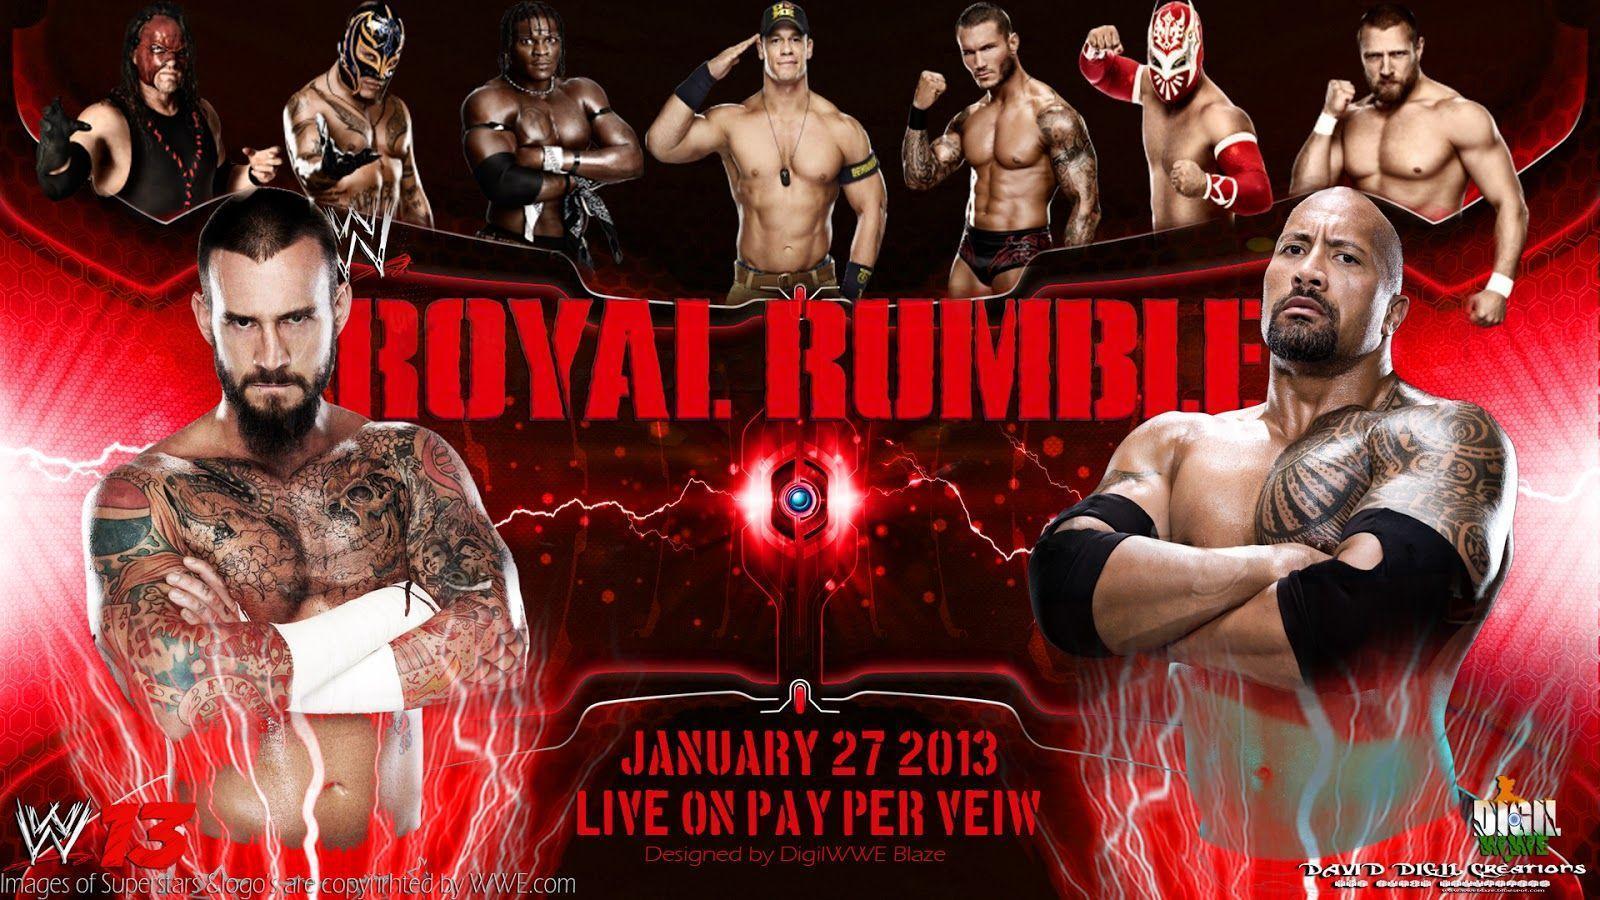 WWE Royal Rumble 2013 Photo Wallpaper Promo Videos. A Sports News